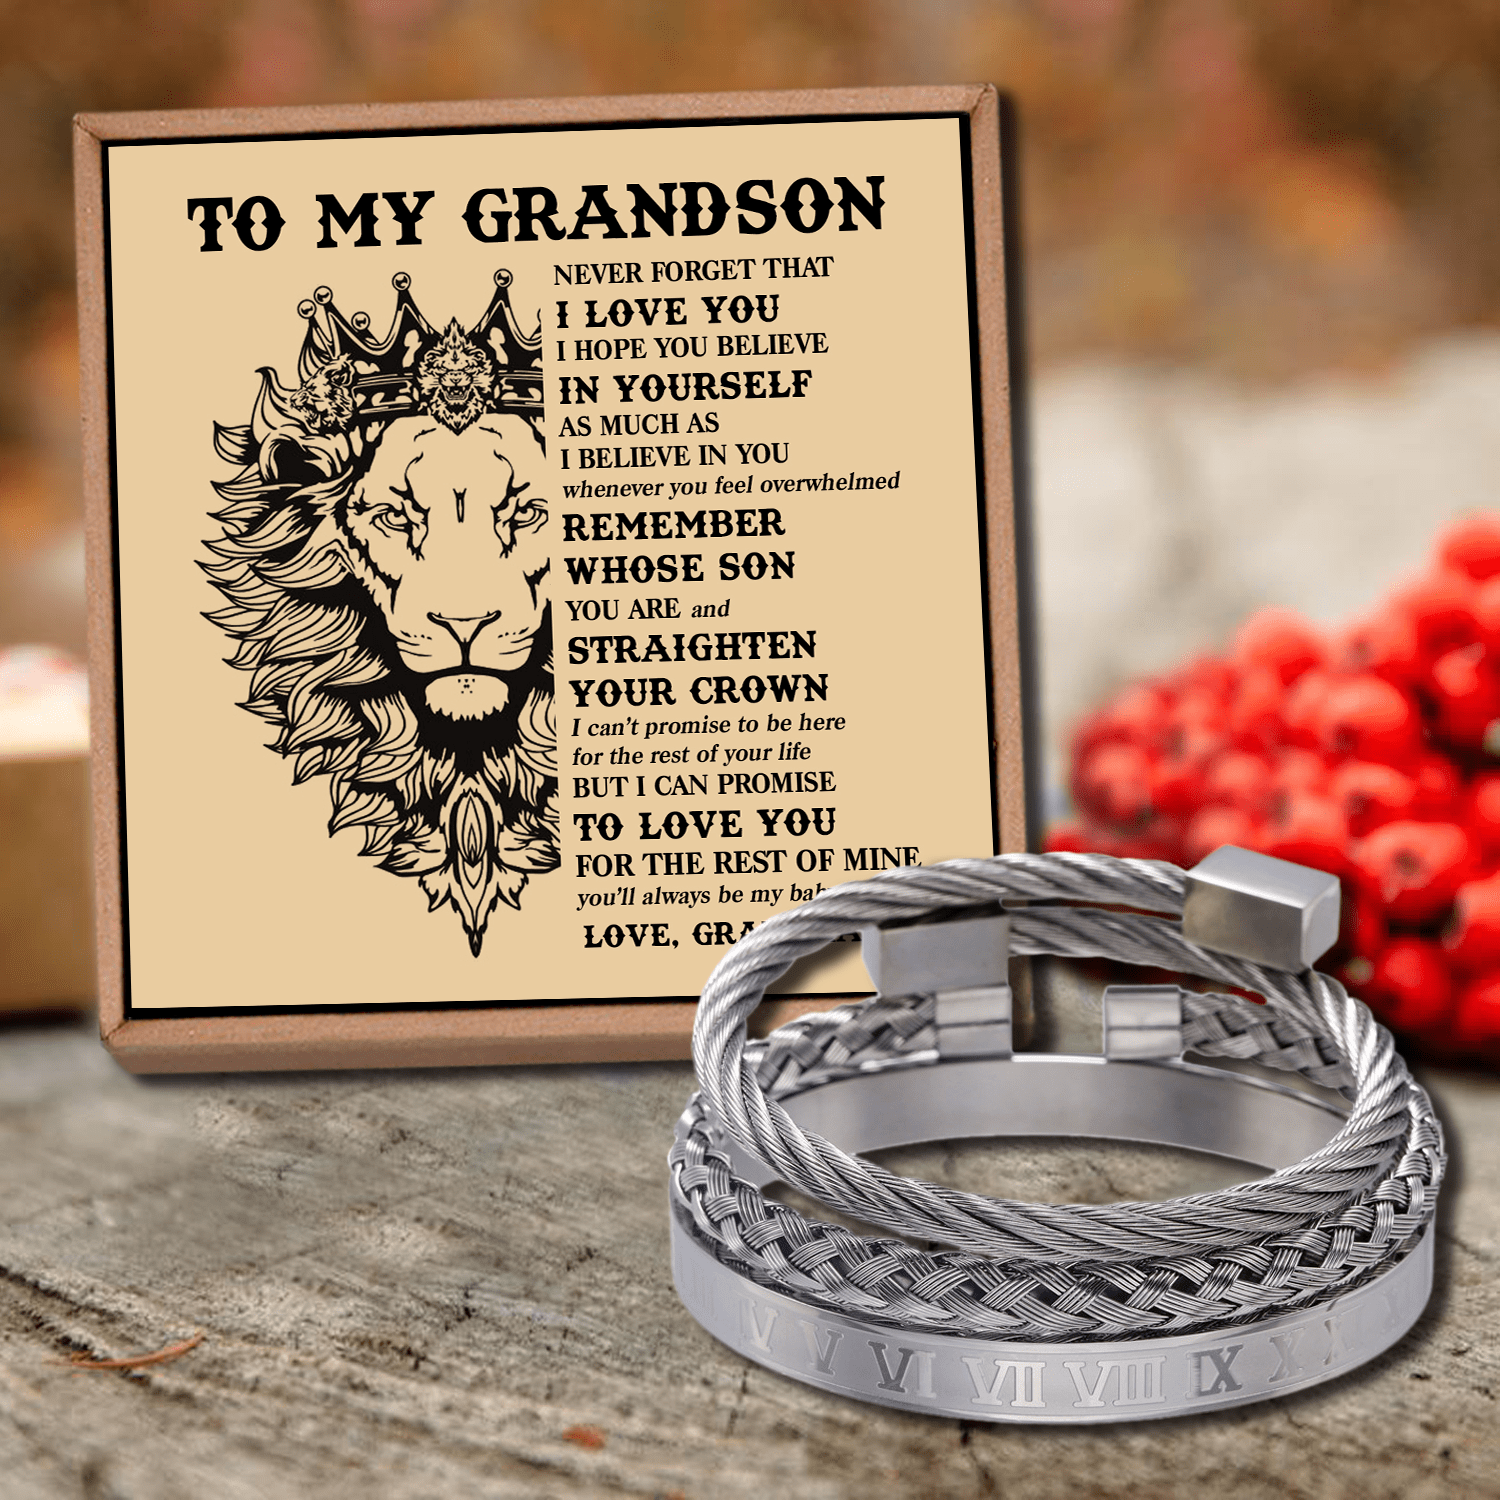 Bracelets Grandma To Grandson - Straighten Your Crown Roman Numeral Bracelet Set Silver GiveMe-Gifts